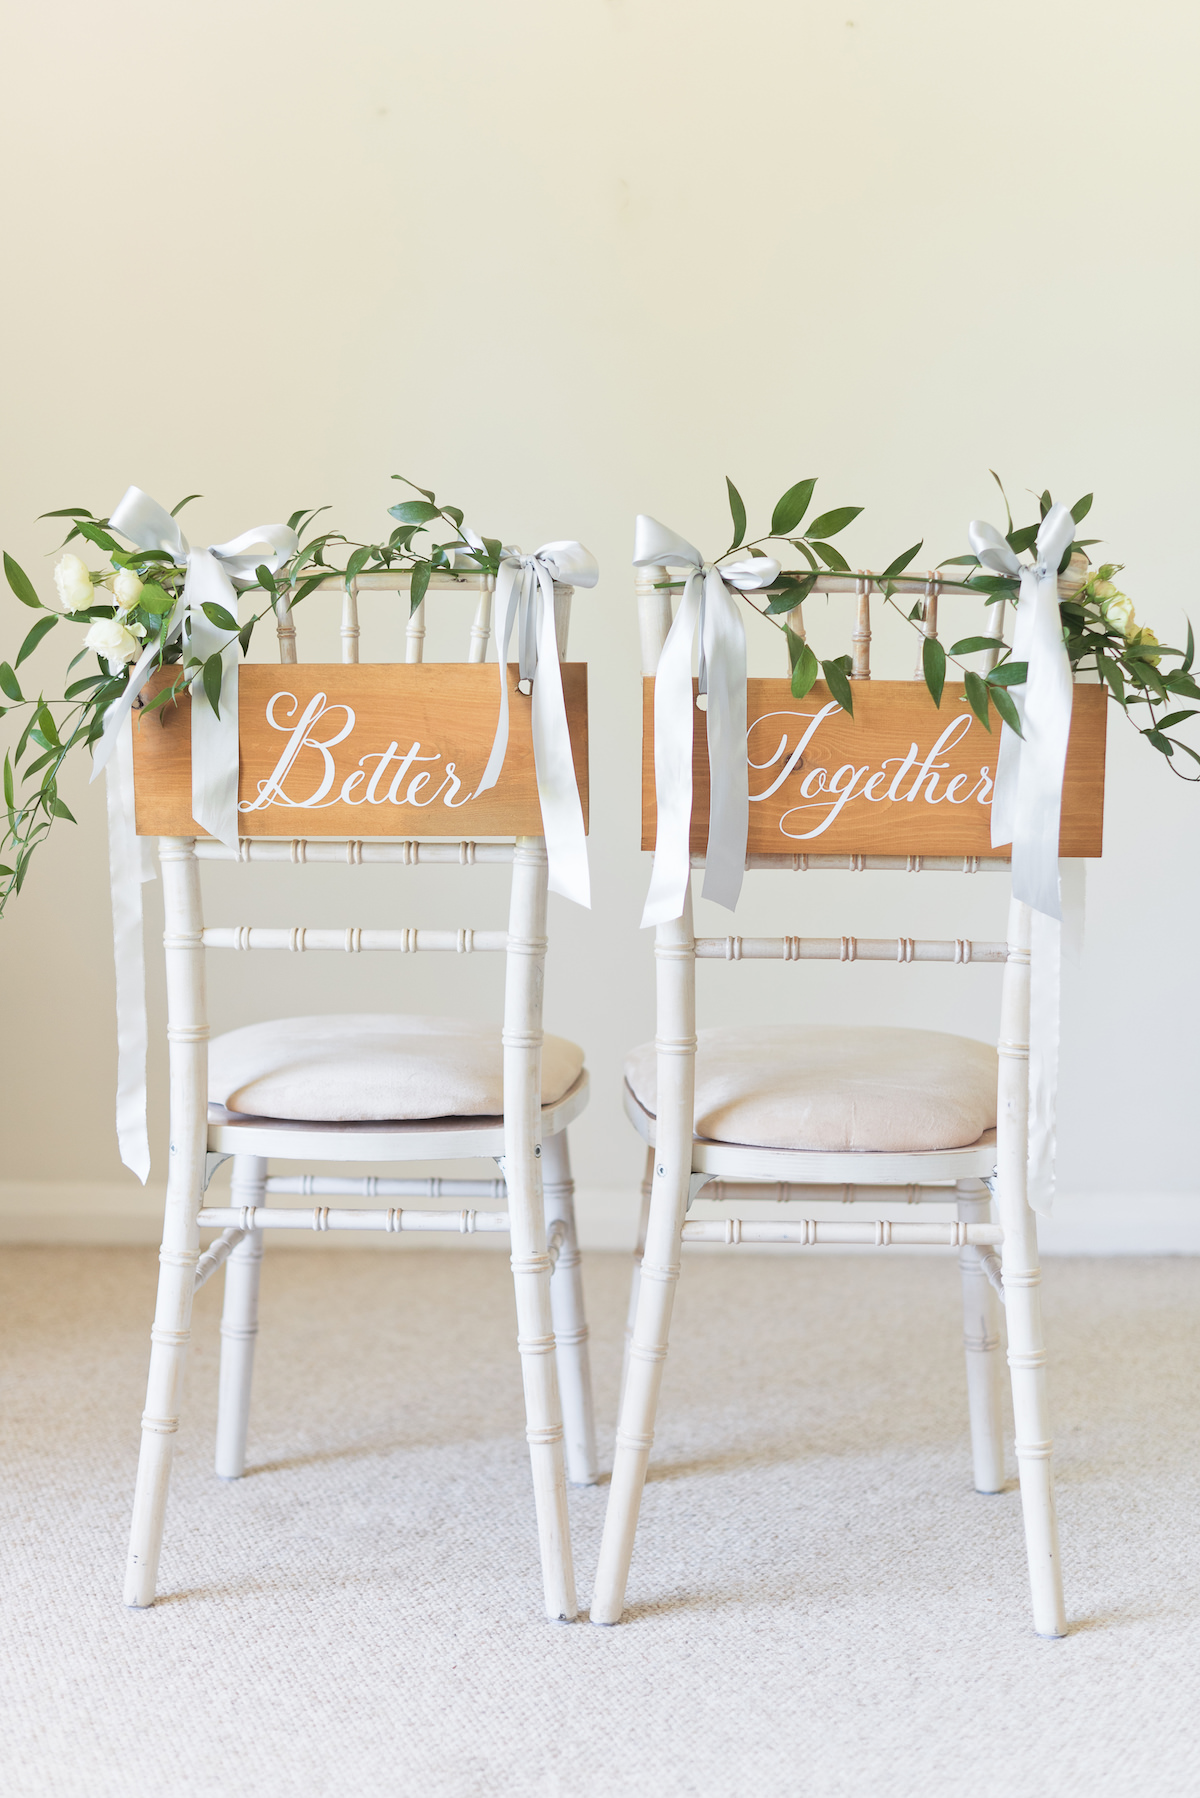 Wood Table Wedding Signs